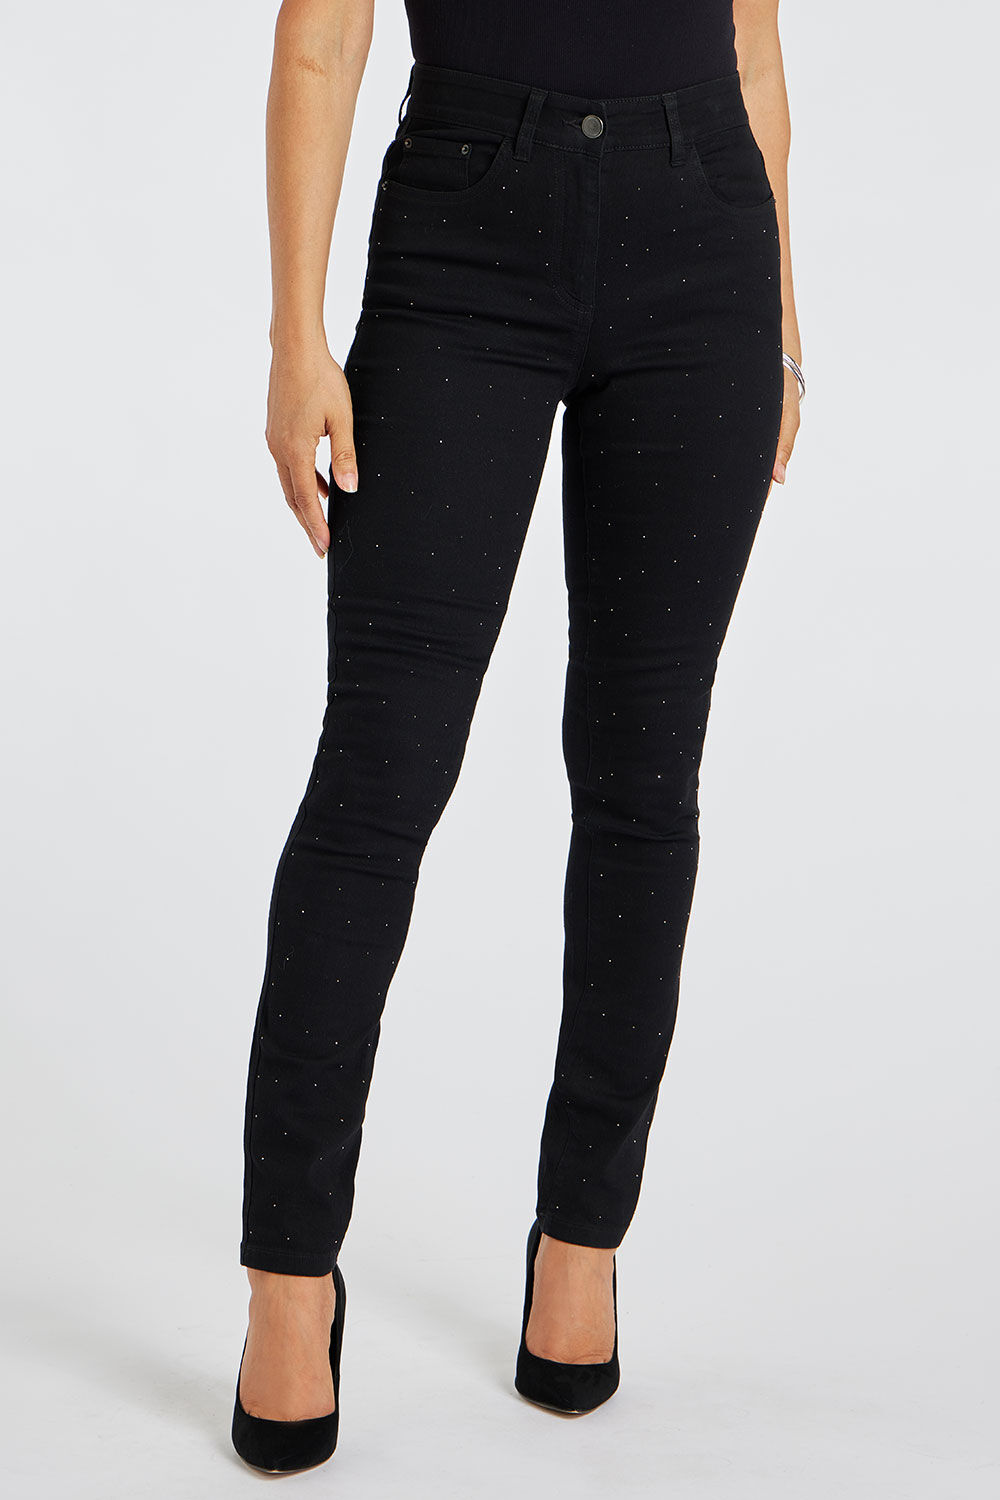 Bonmarche Black The Susie Embellished Front Slim Leg Jeans, Size: 20